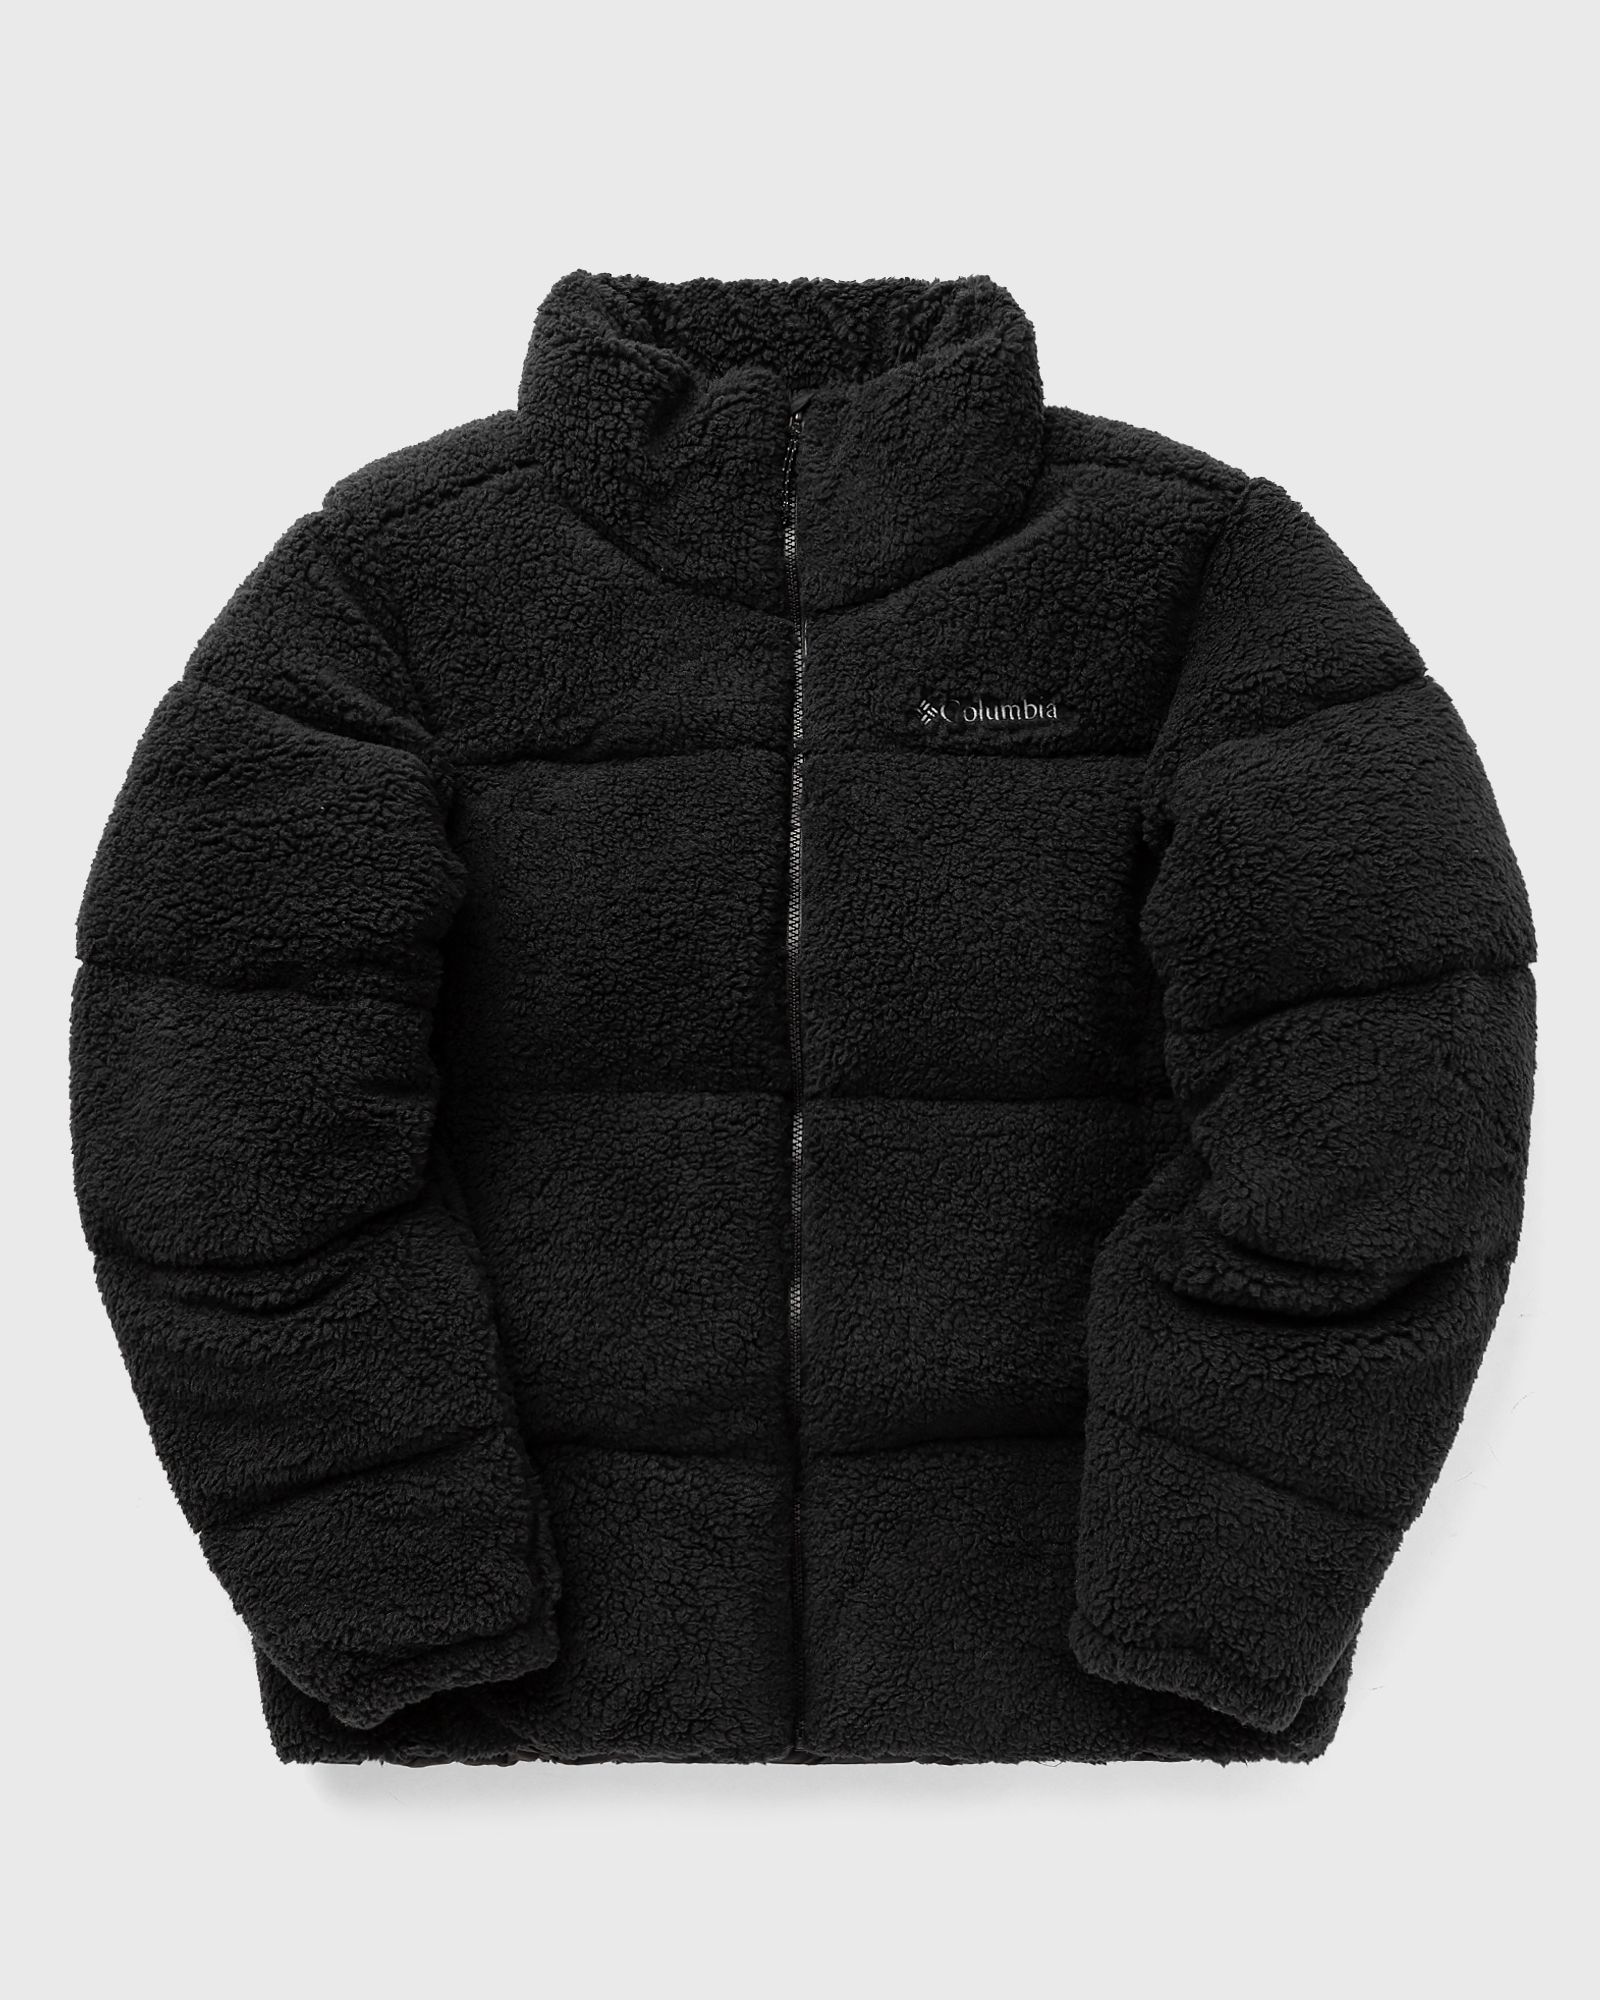 Columbia - puffect sherpa jacket men down & puffer jackets black in größe:m